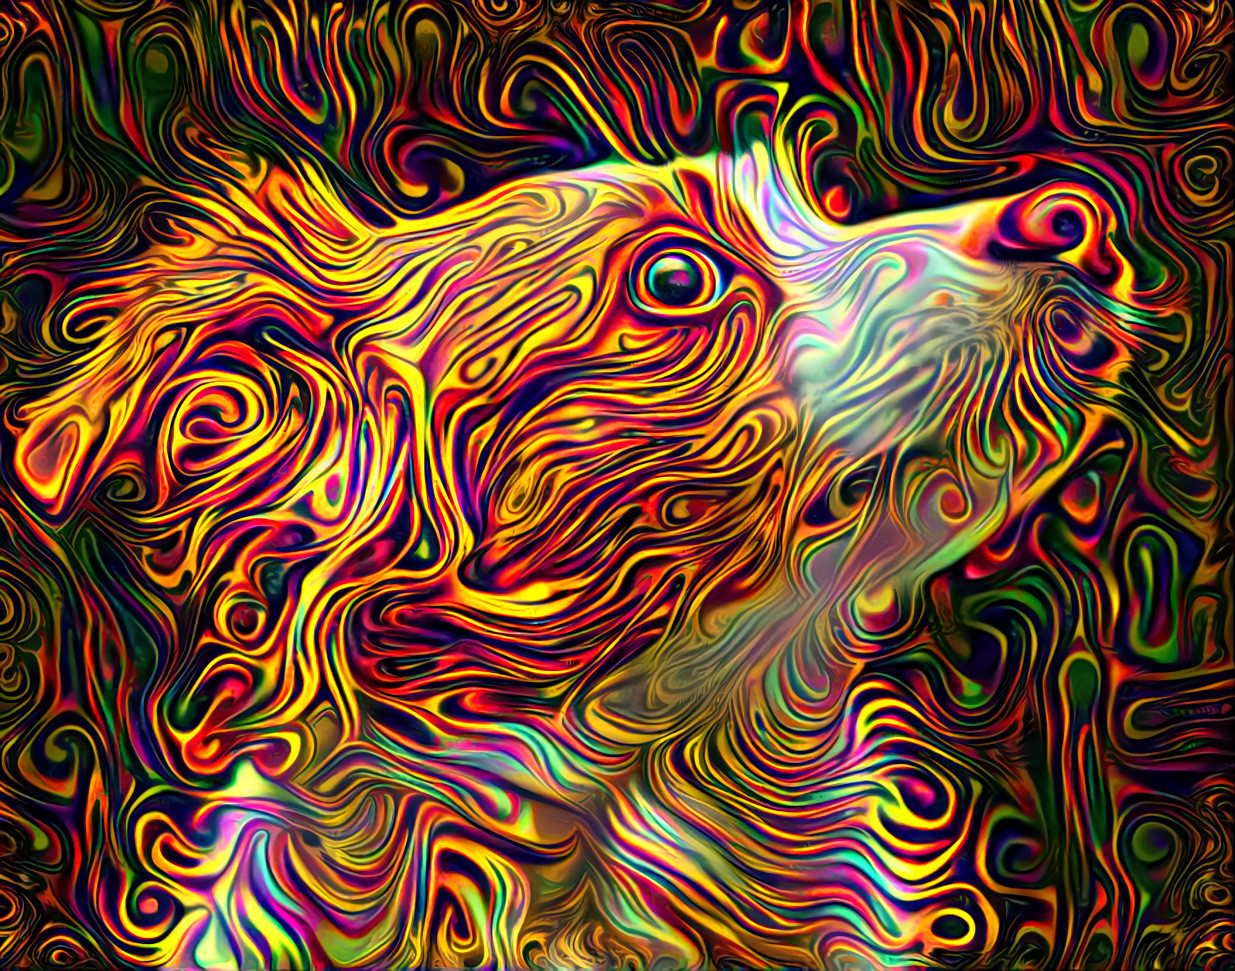 Psychedelic Dog - Style Art by Daniel W. Prust